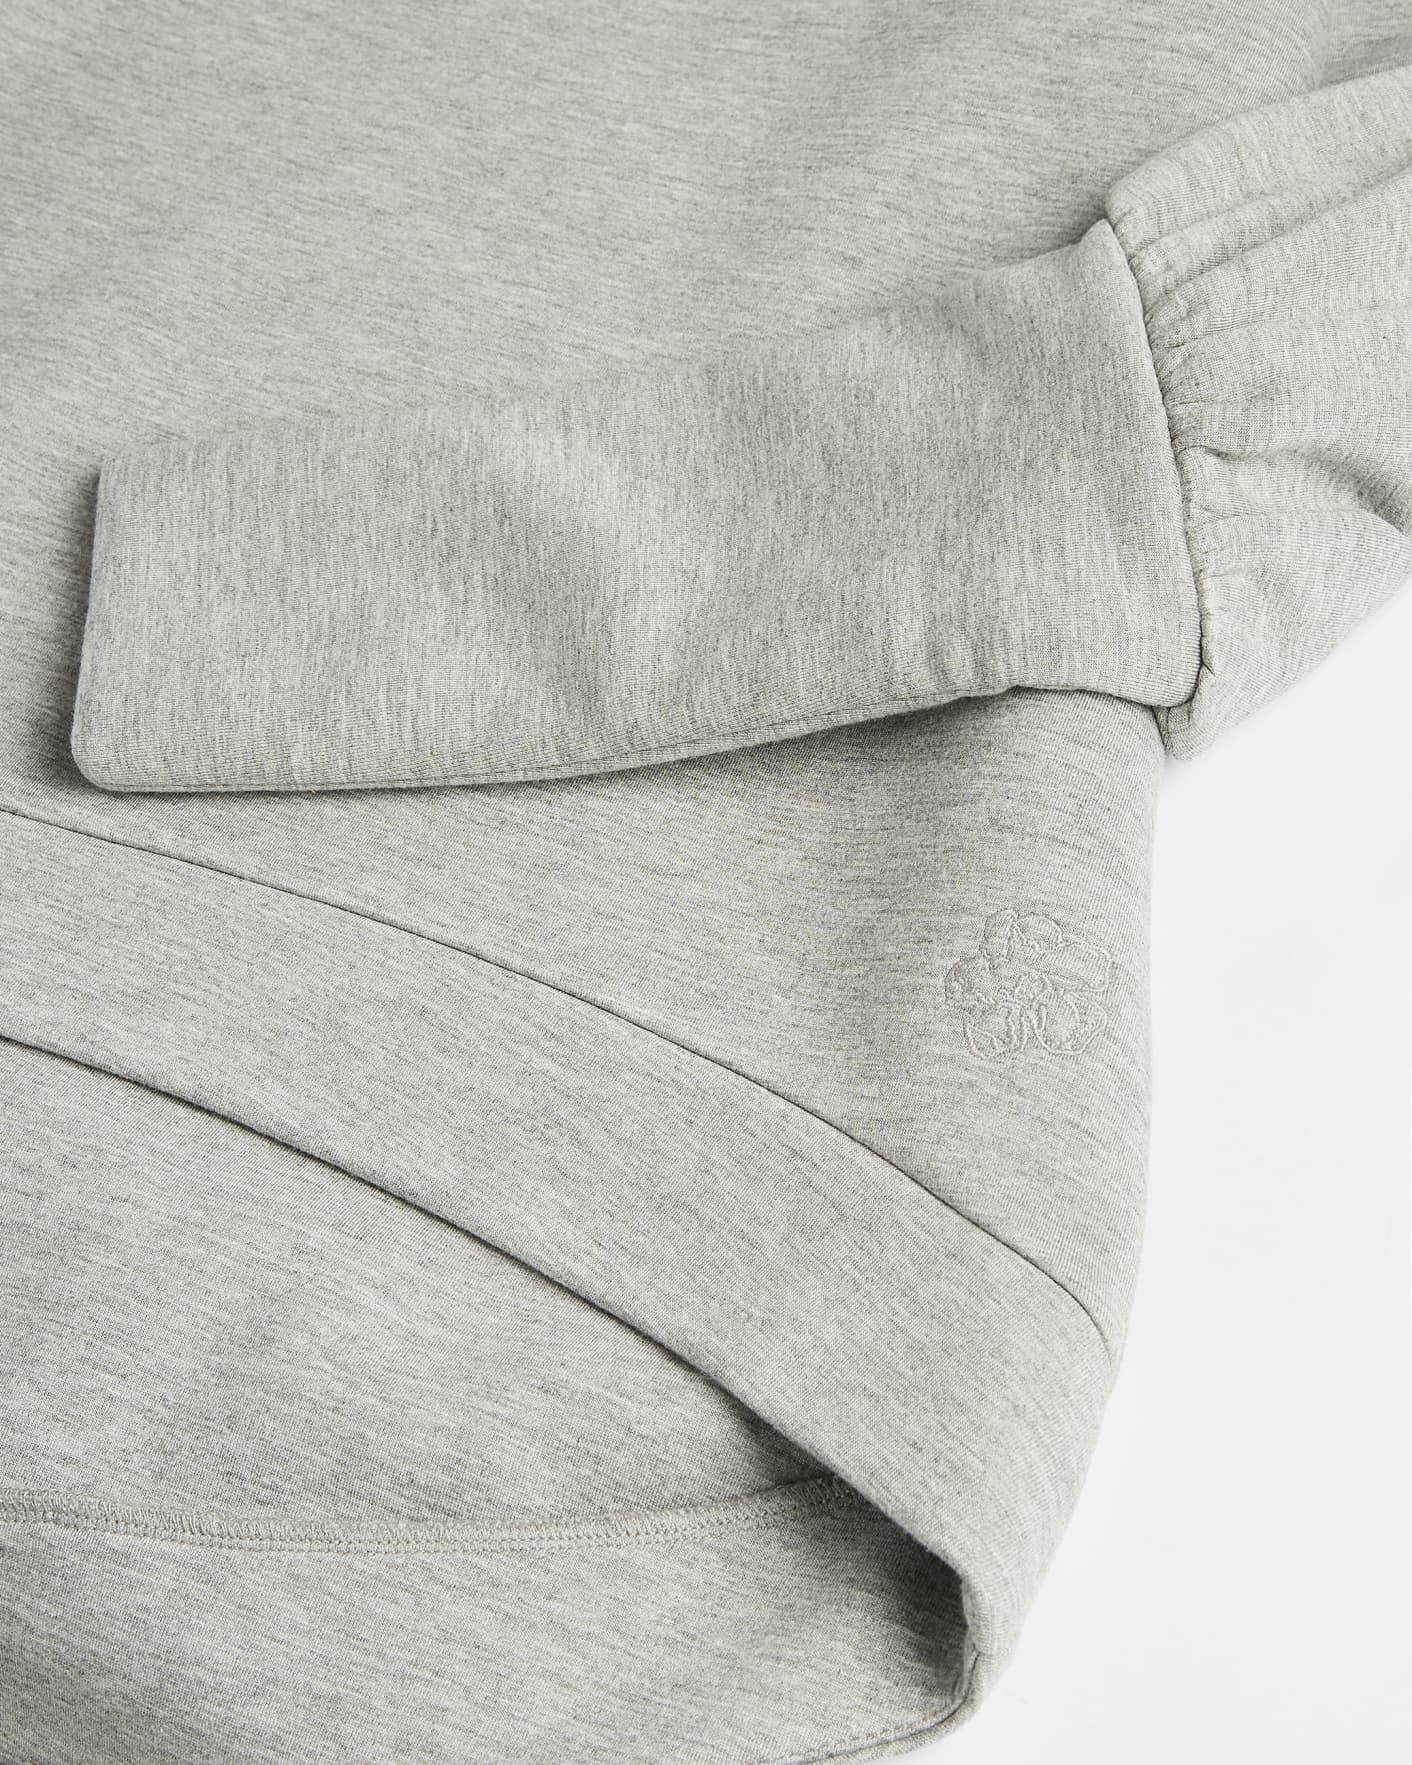 Medium Grey Sweatshirt With Shoulder Detail Ted Baker